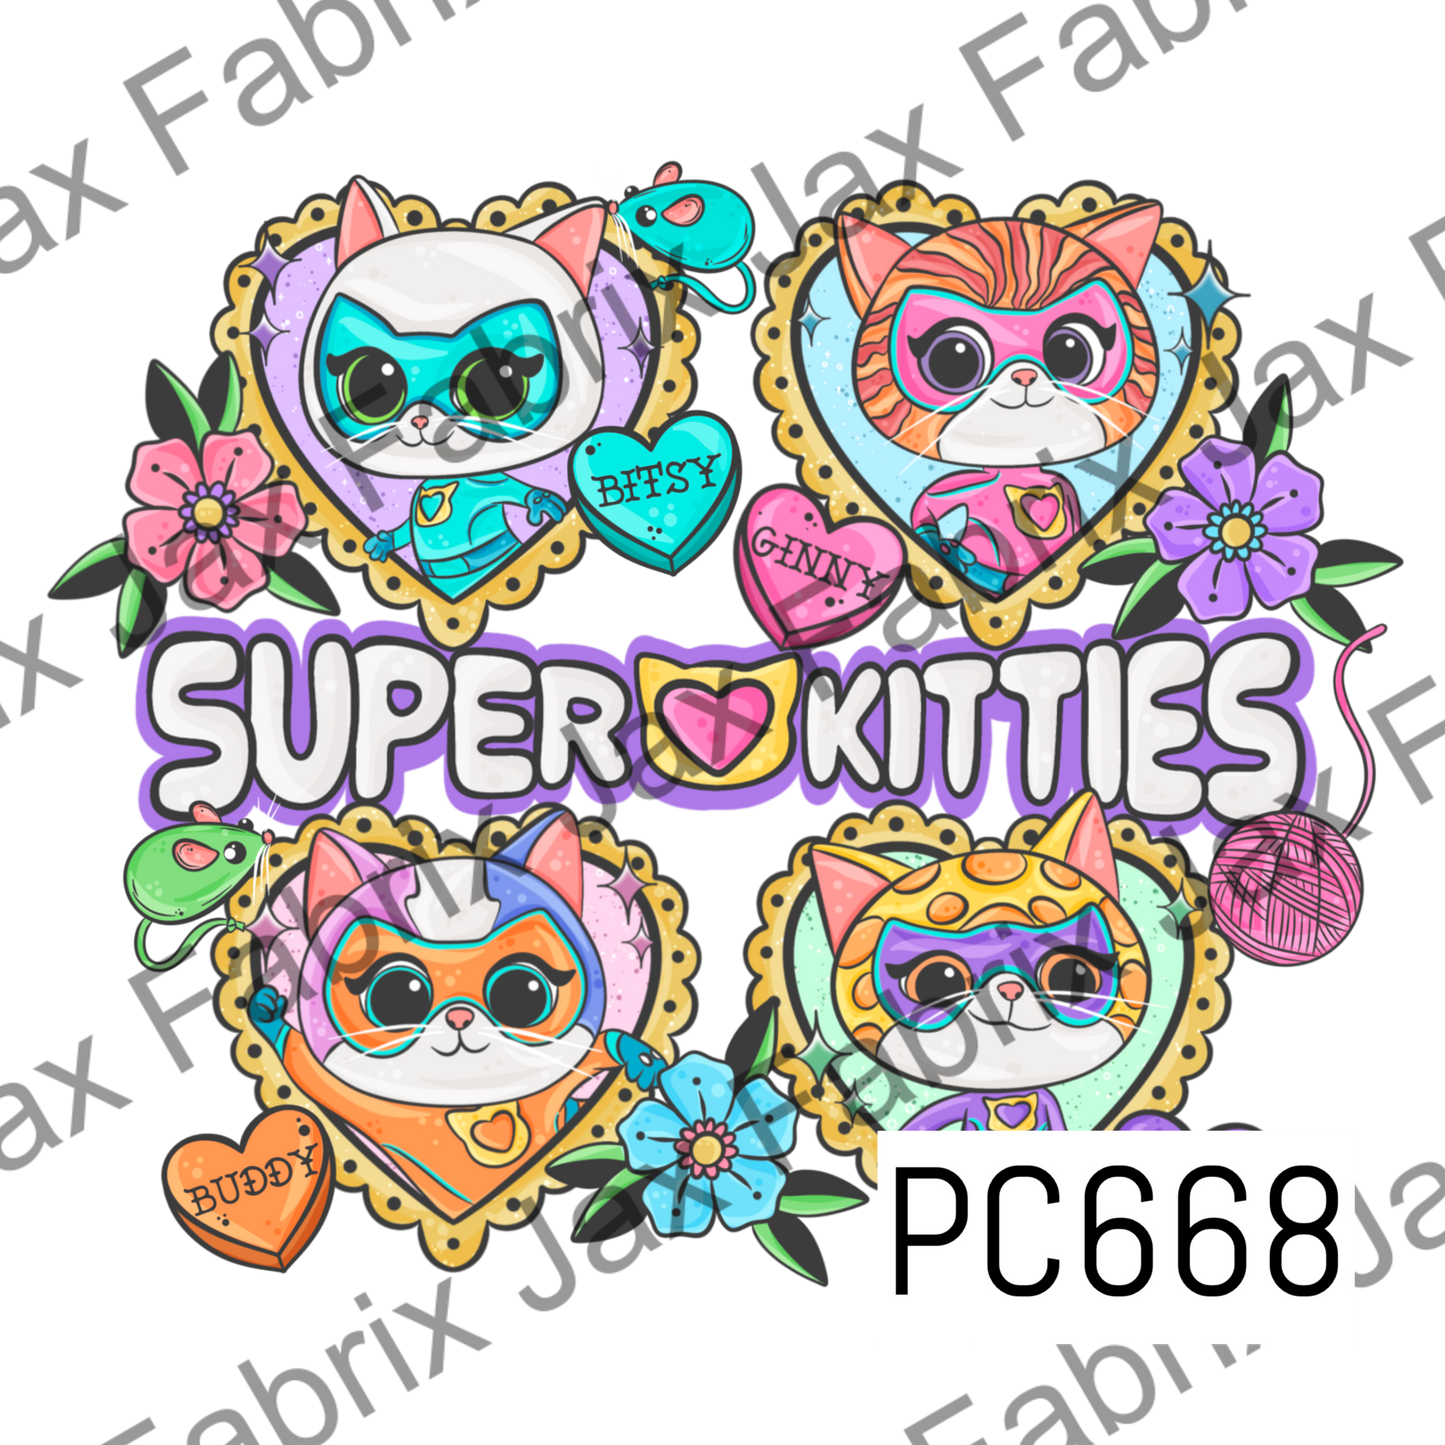 Powerful Kitties PNG PC668